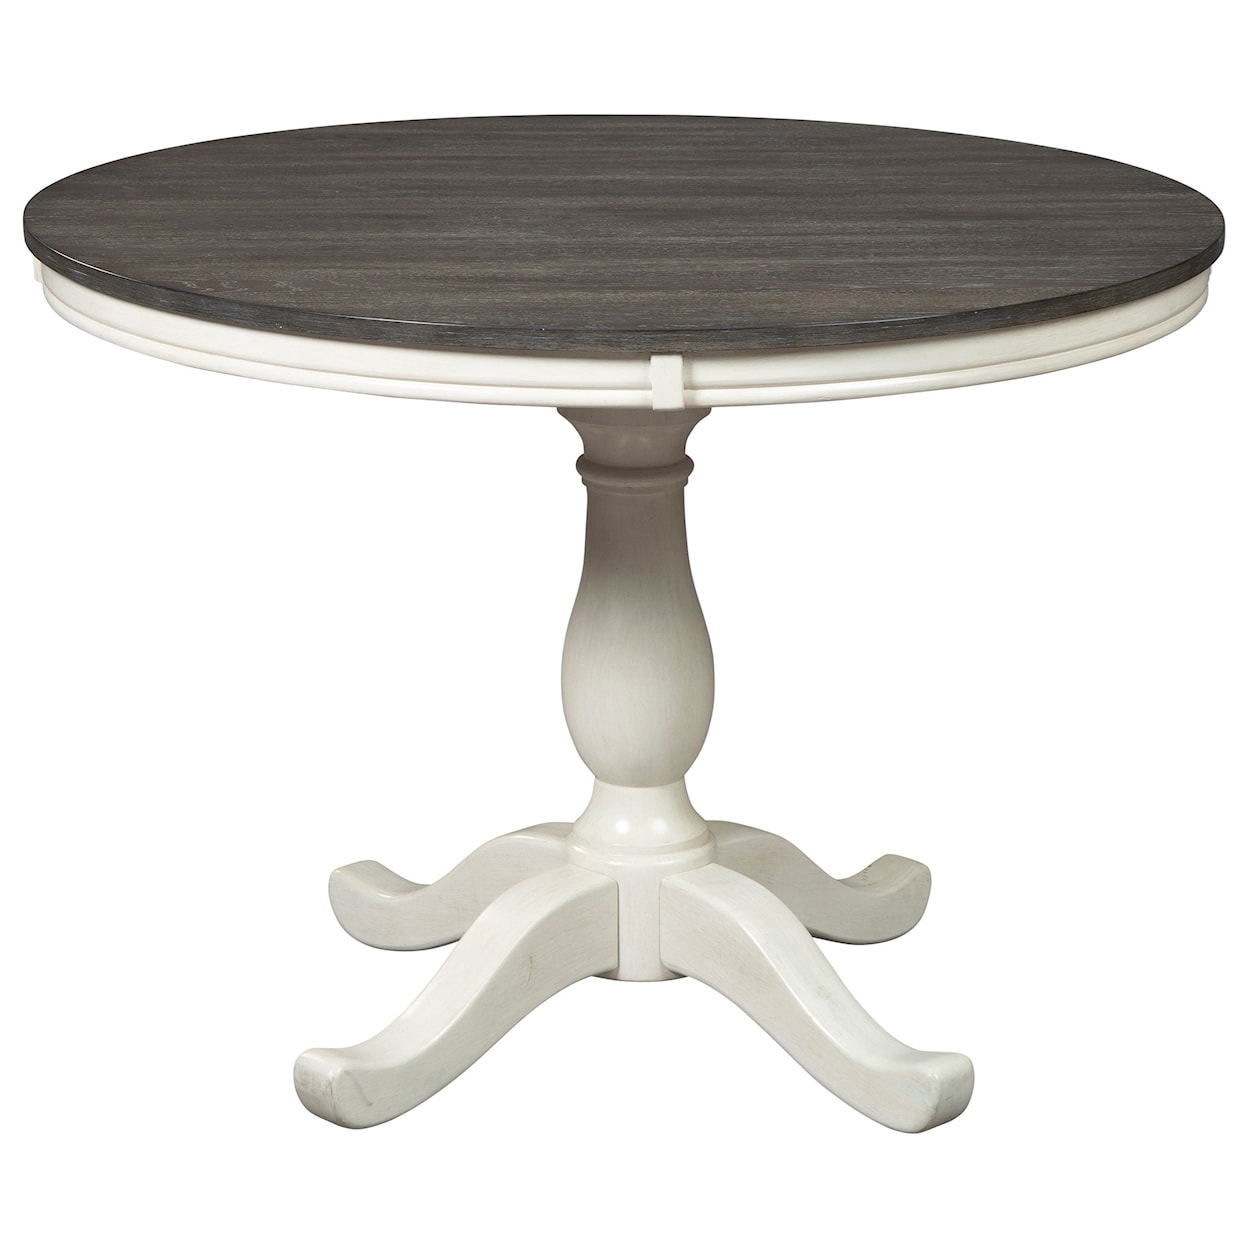 Signature Design Nelling 5-Piece Round Dining Table Set